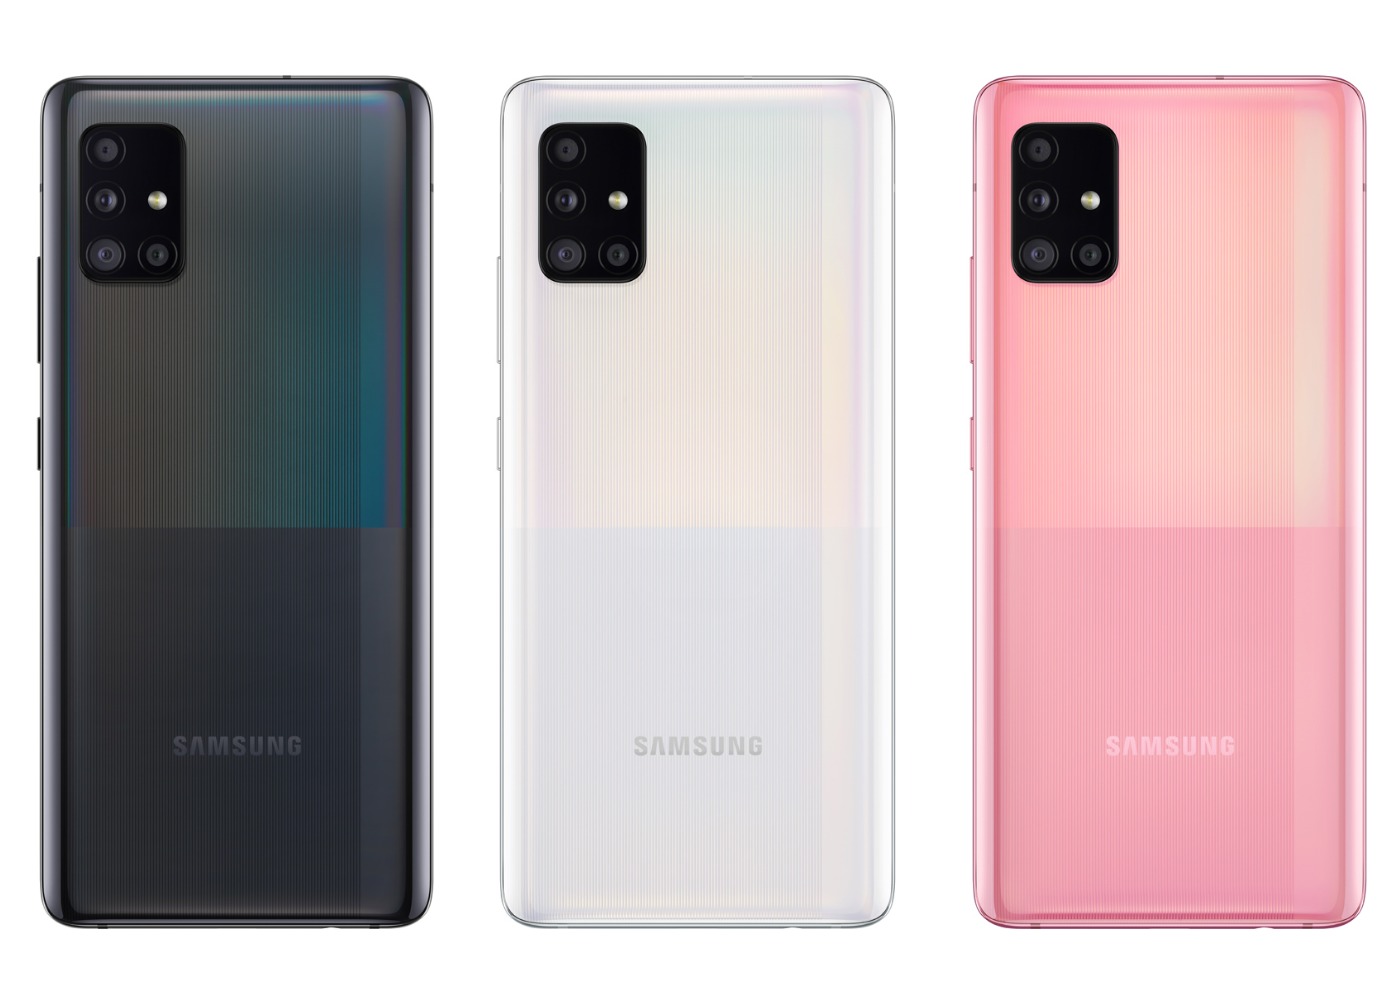 479 euron 5G-älypuhelin Samsung Galaxy A51 5G tulossa Suomeen